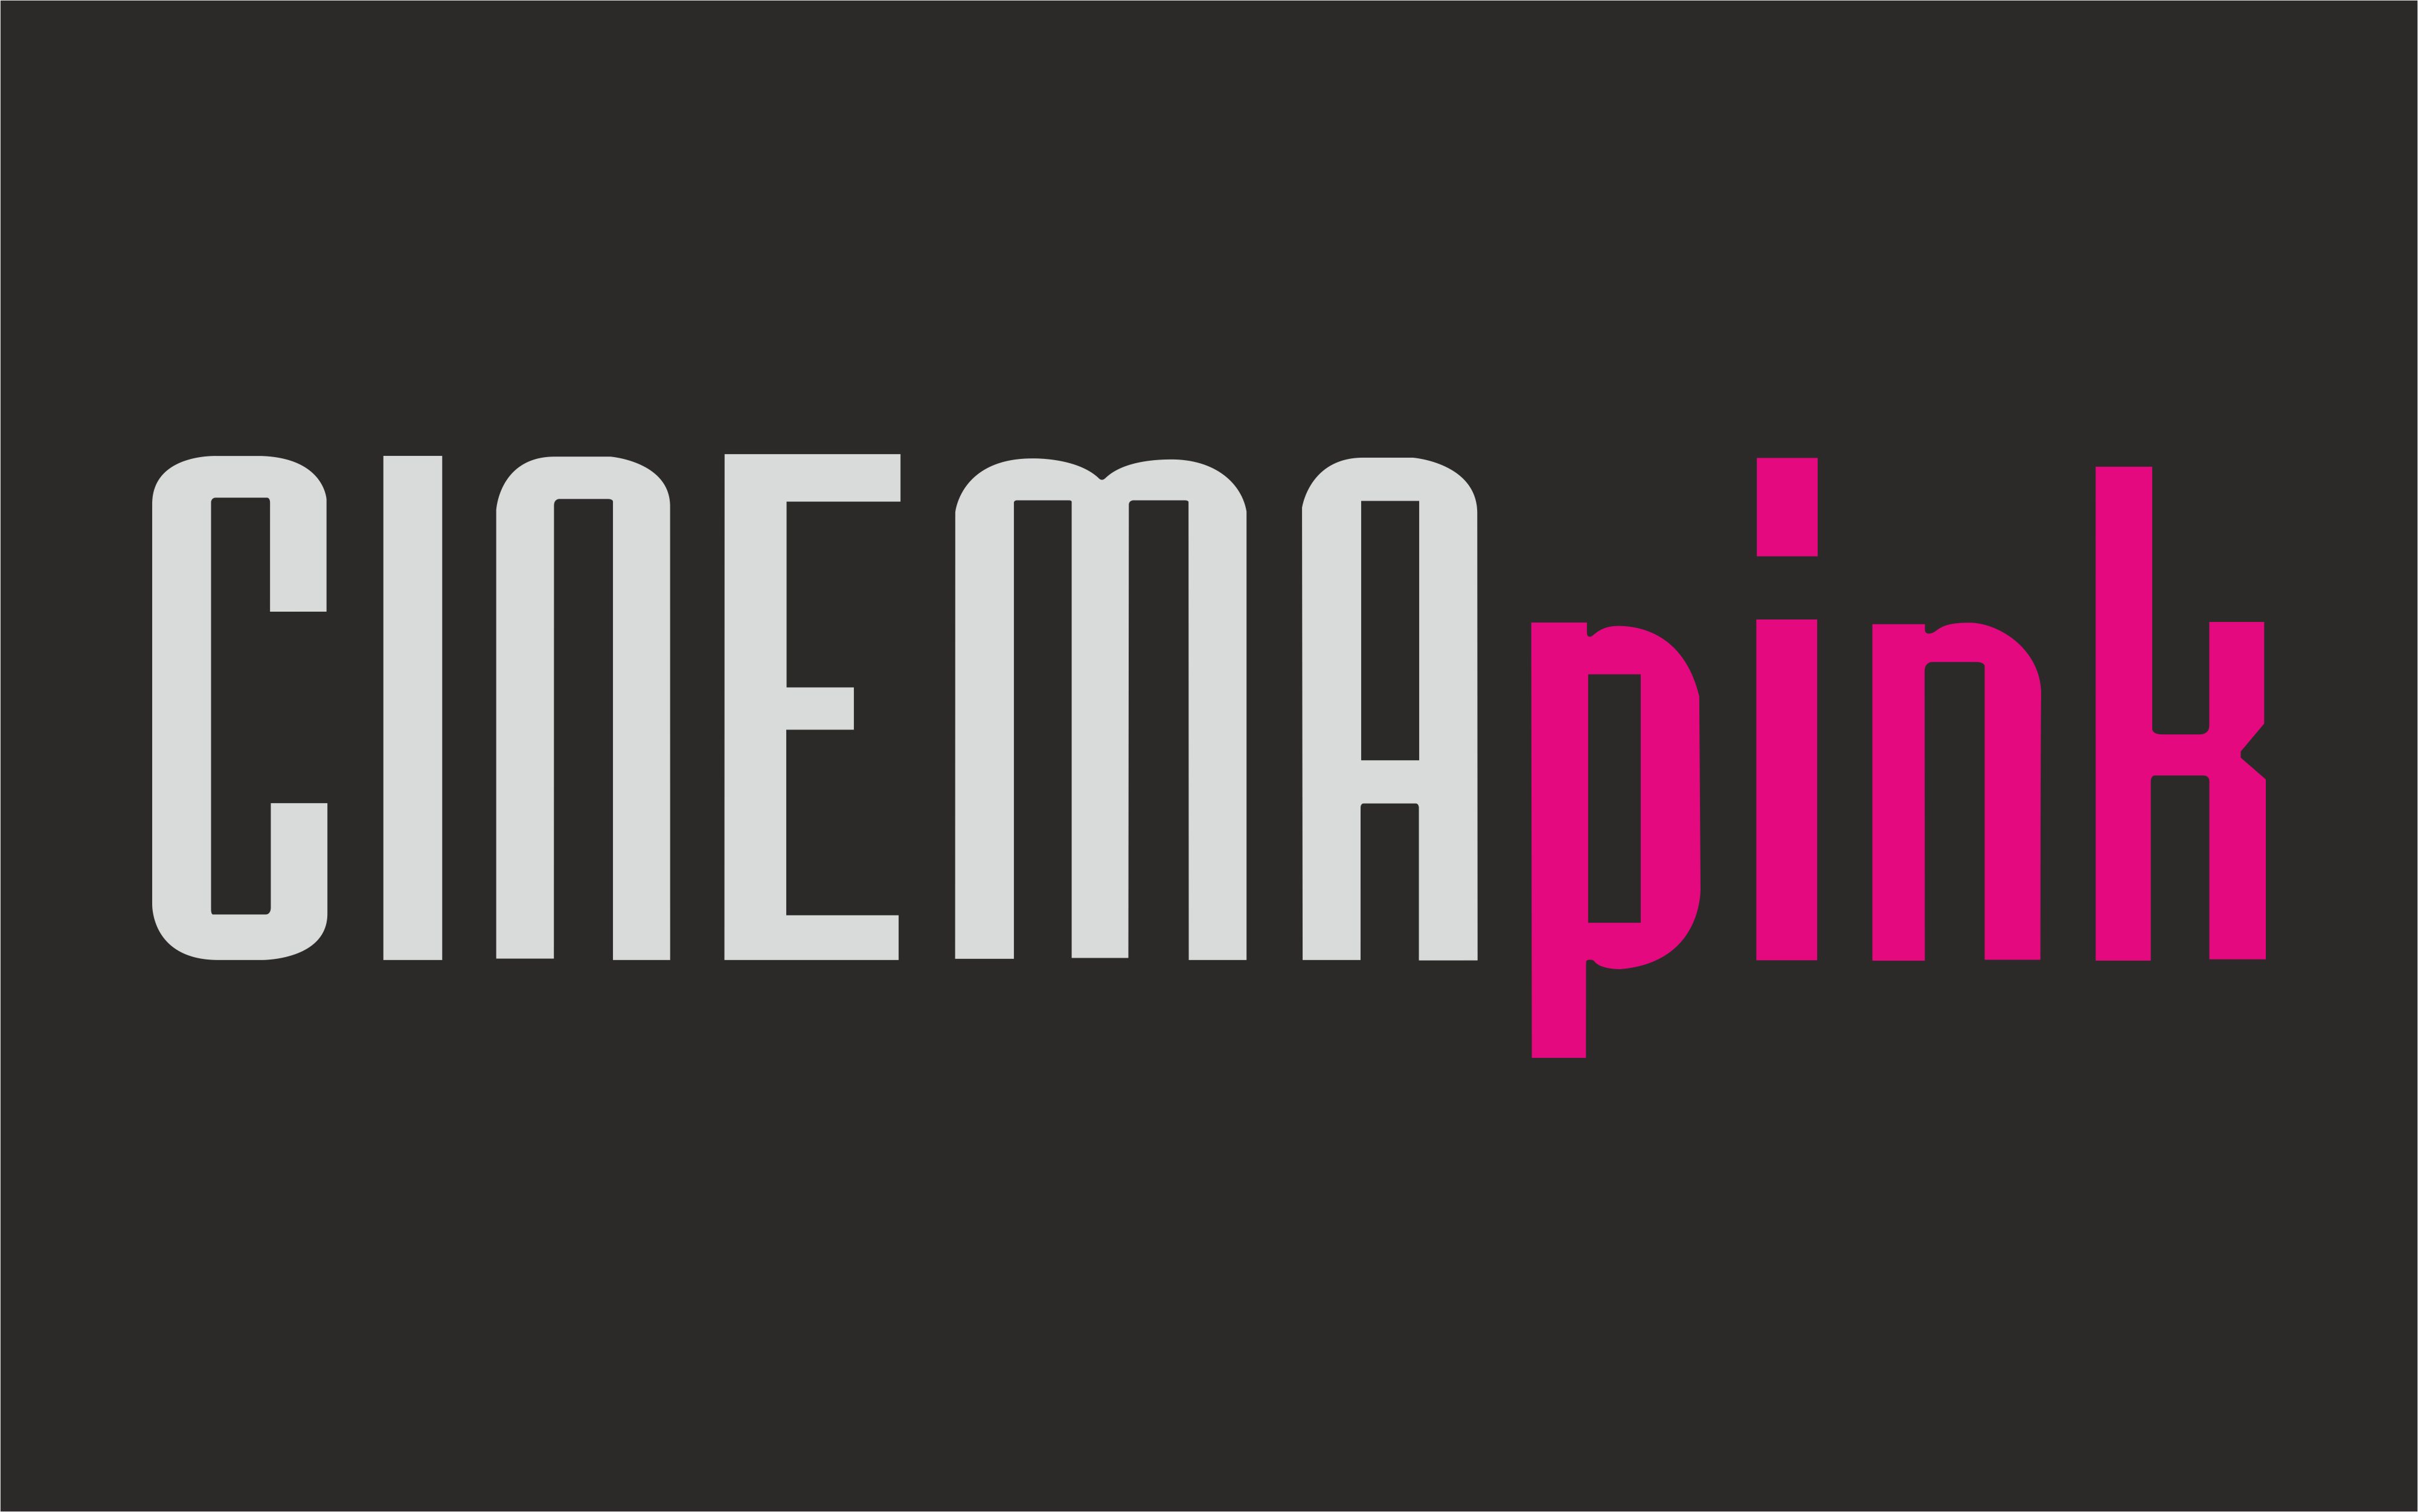 Cinema Pink